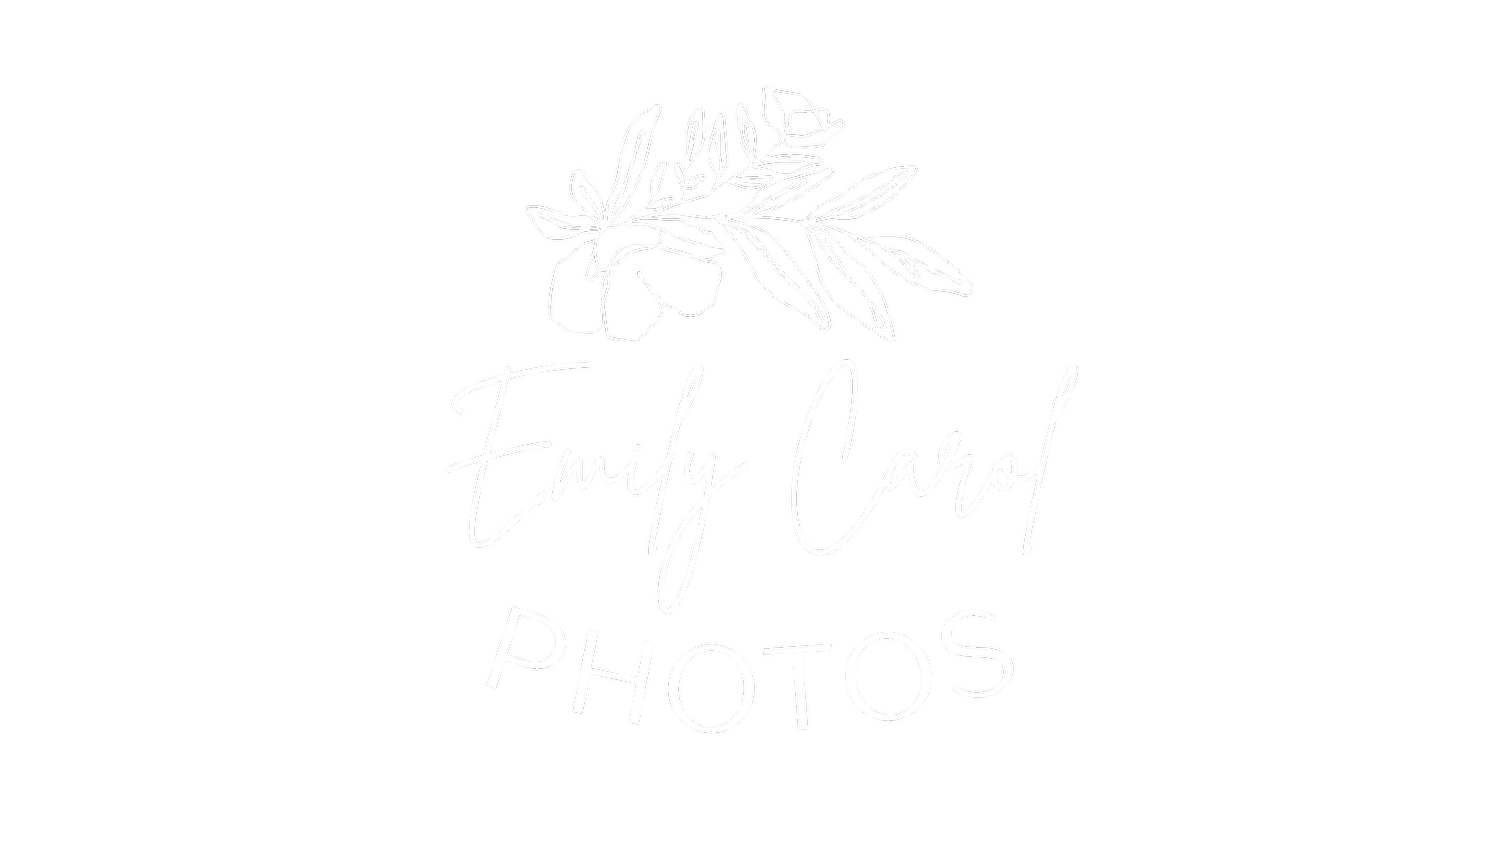 Emily Carol Photos